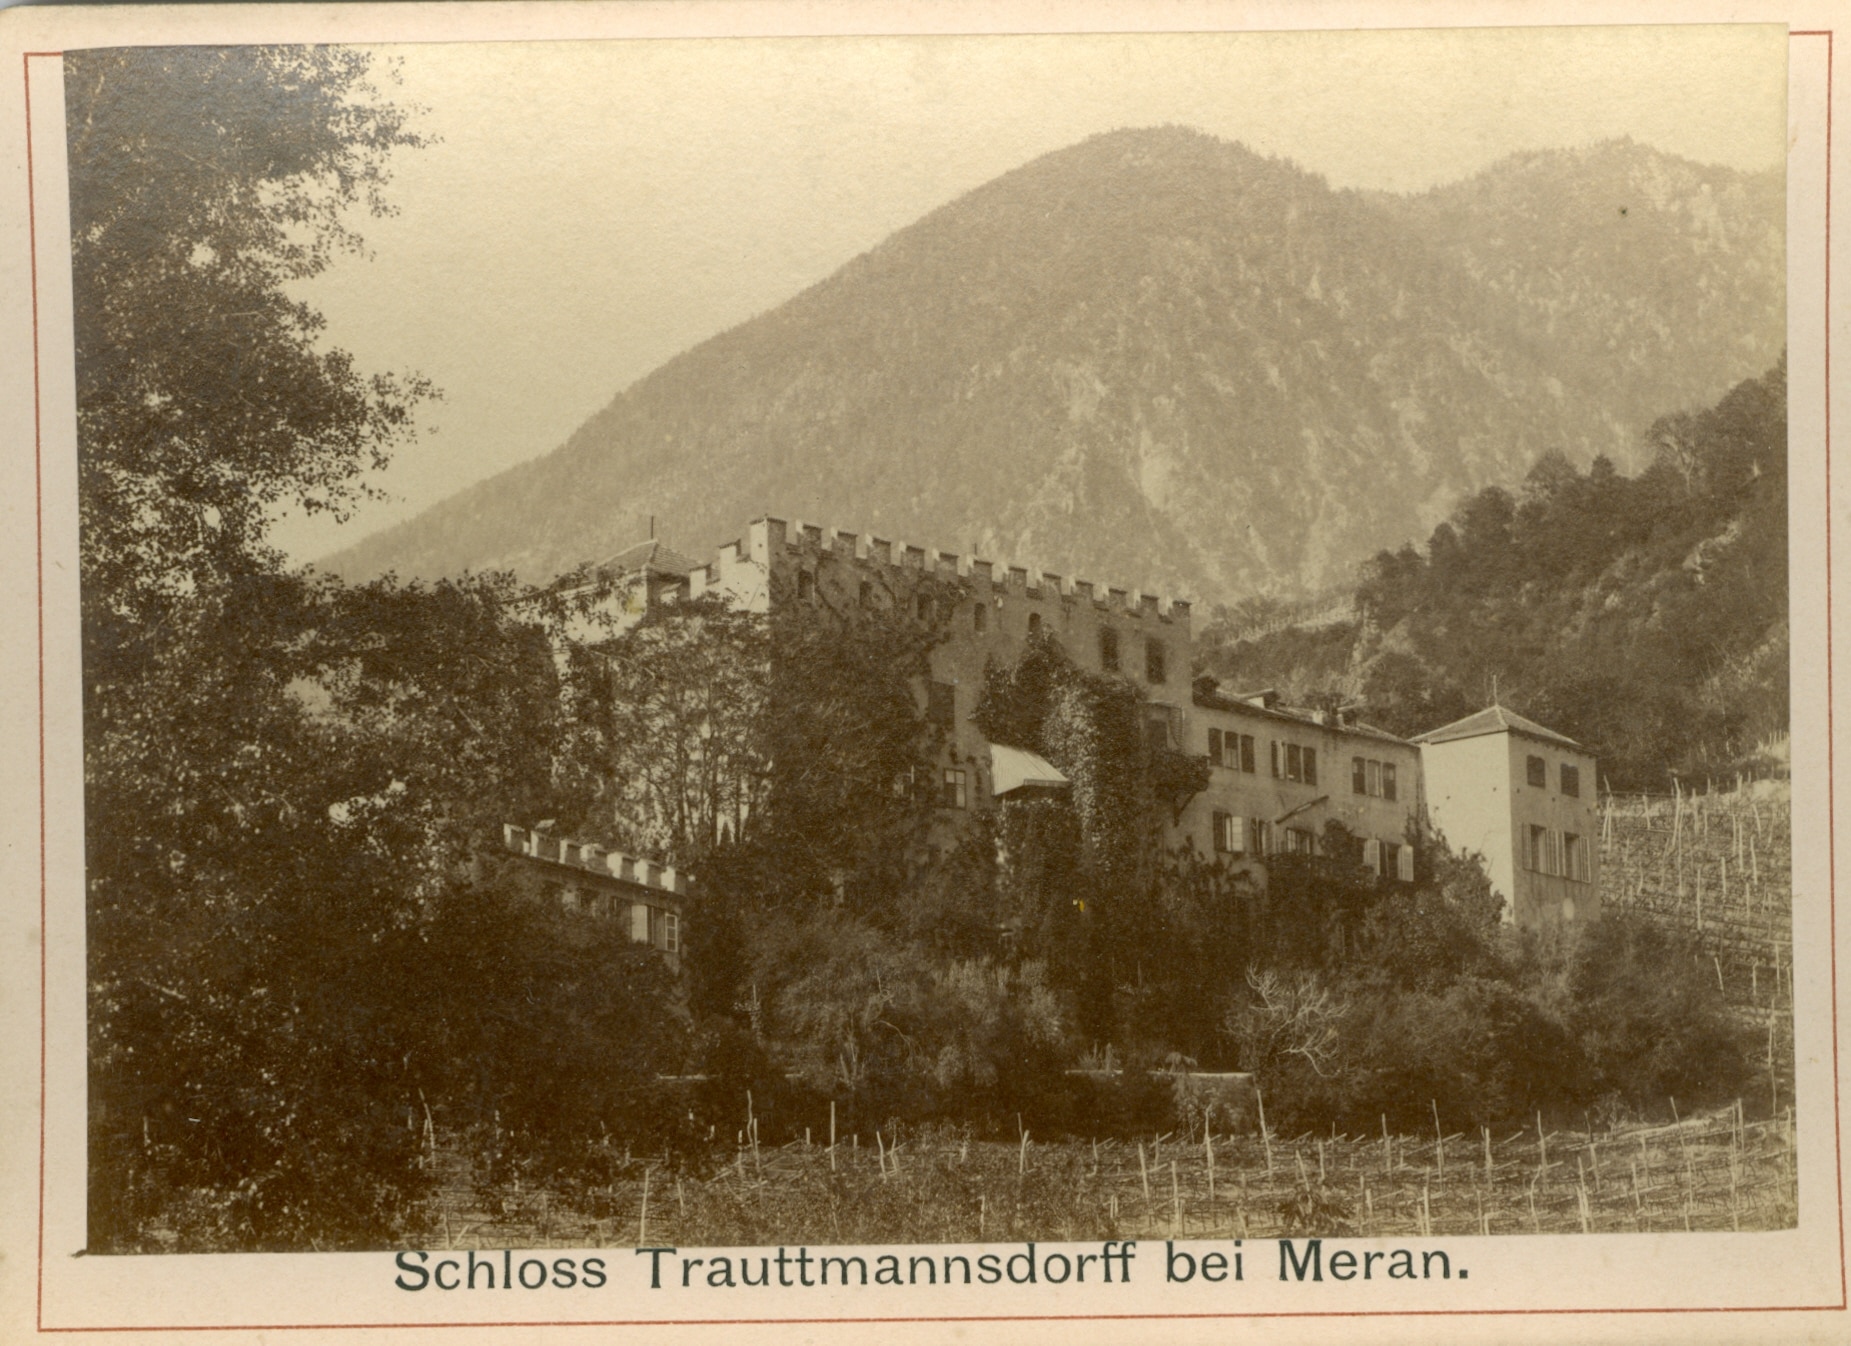 Historische Fotografie: Schloss Trauttmannsdorff